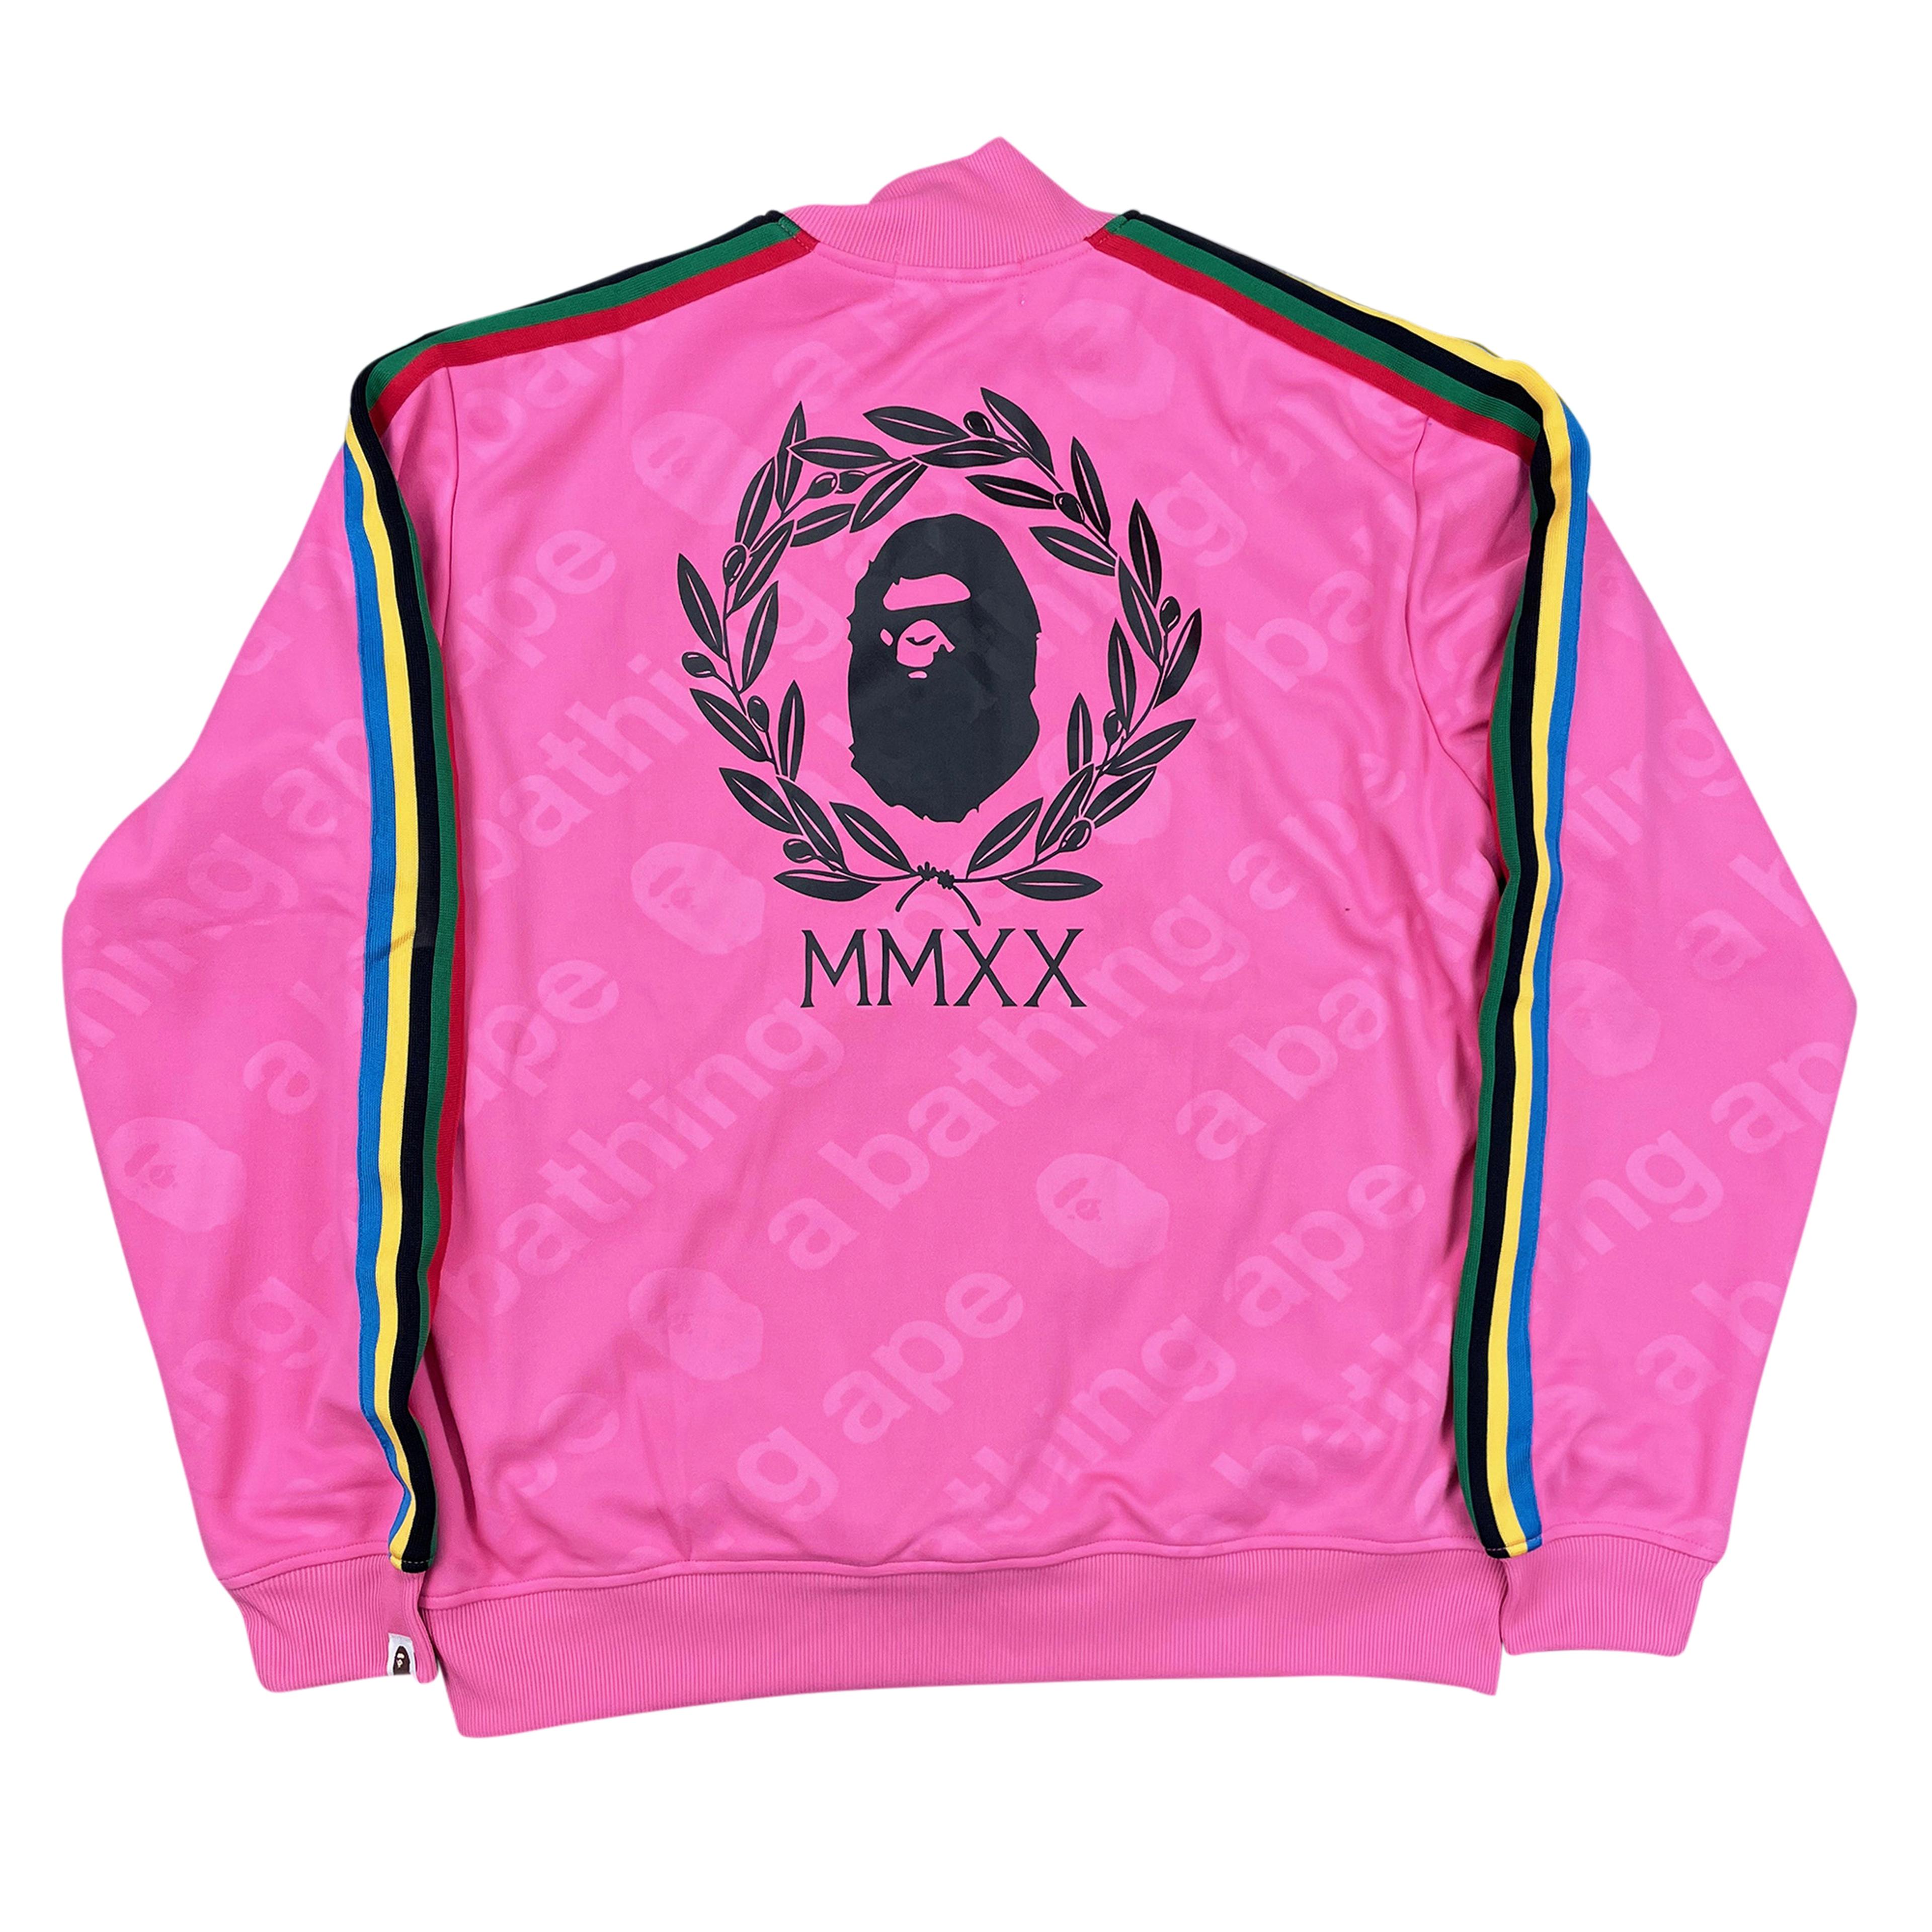 BAPE MMXX Track Jacket Pink | A Bathing Ape 